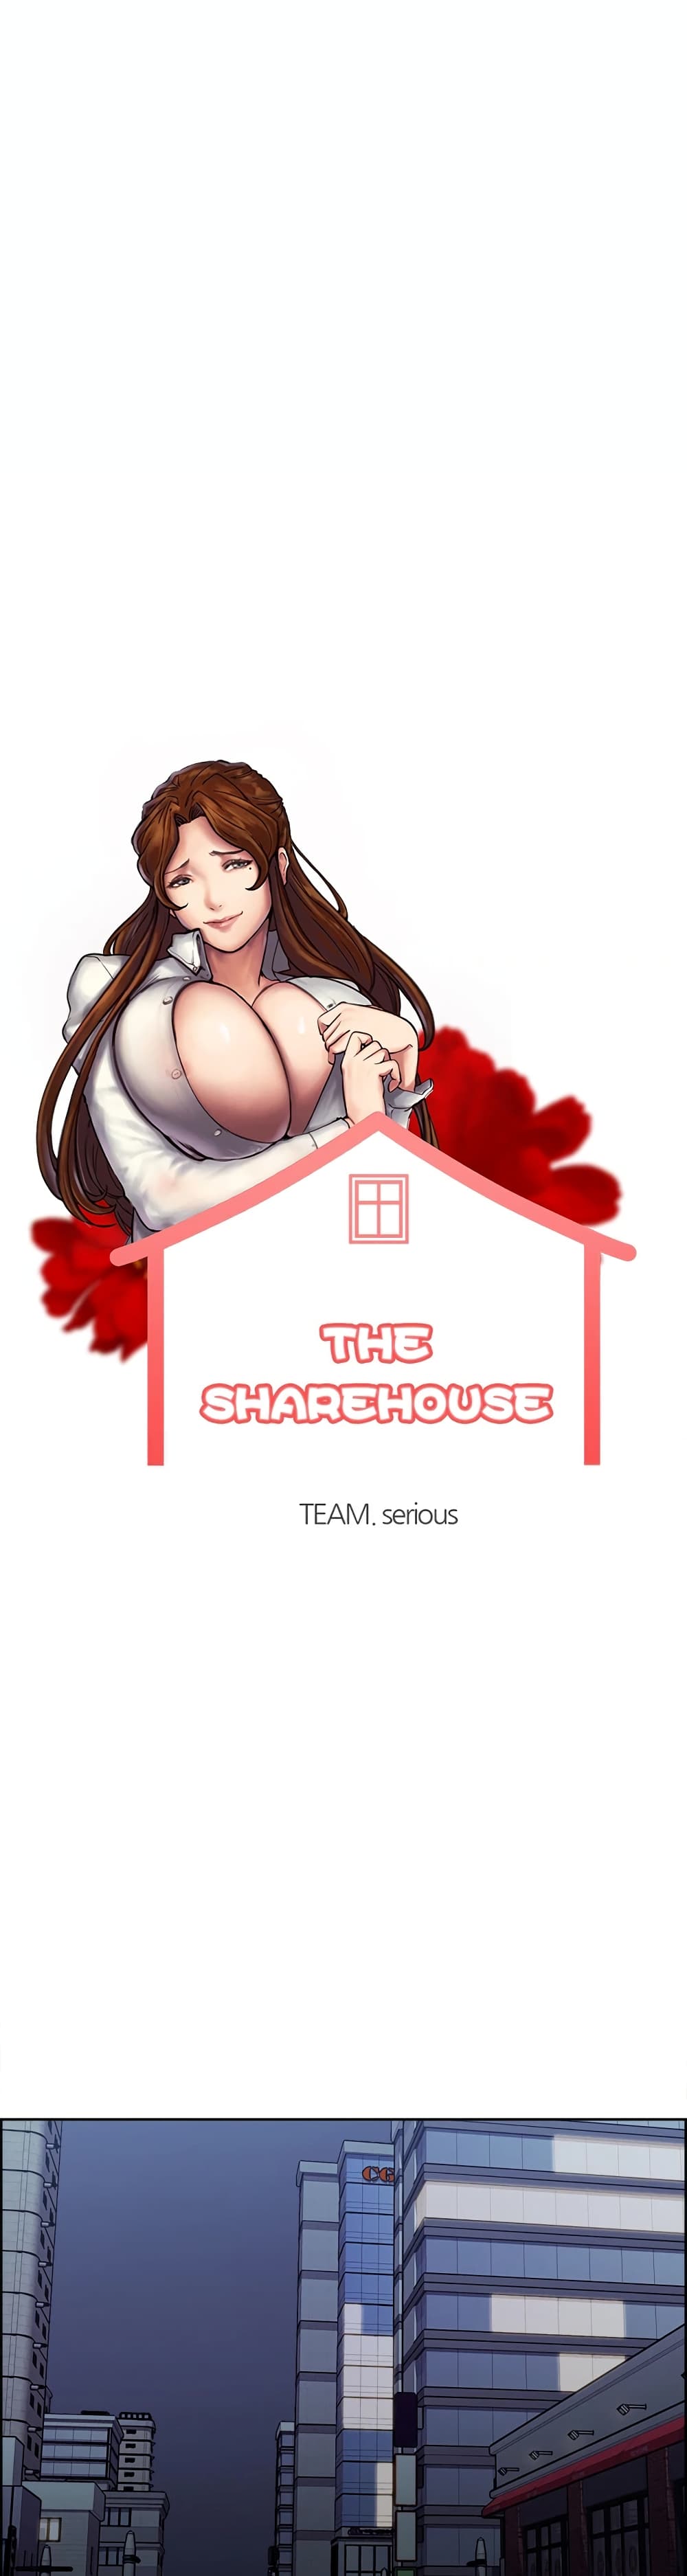 The Sharehouse 34 (1)